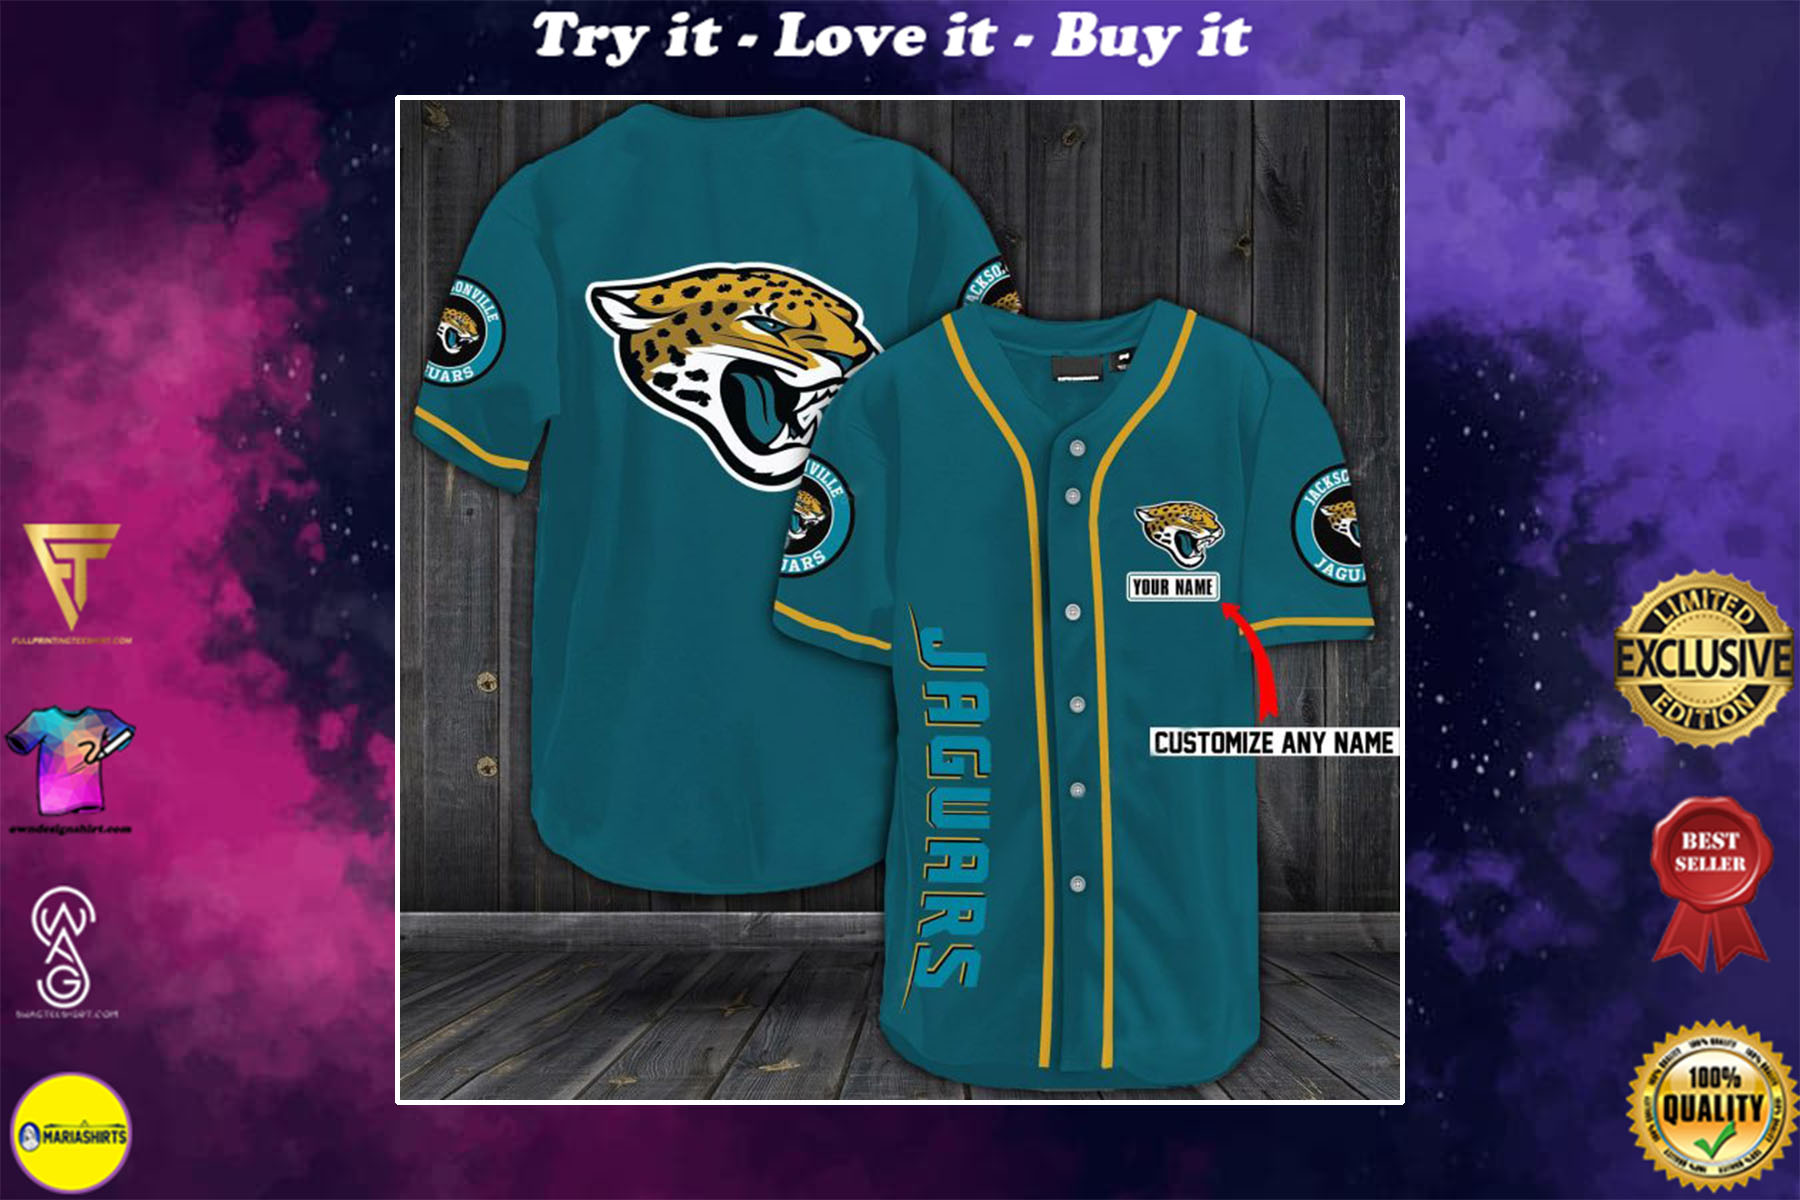 personalized jaguars jersey